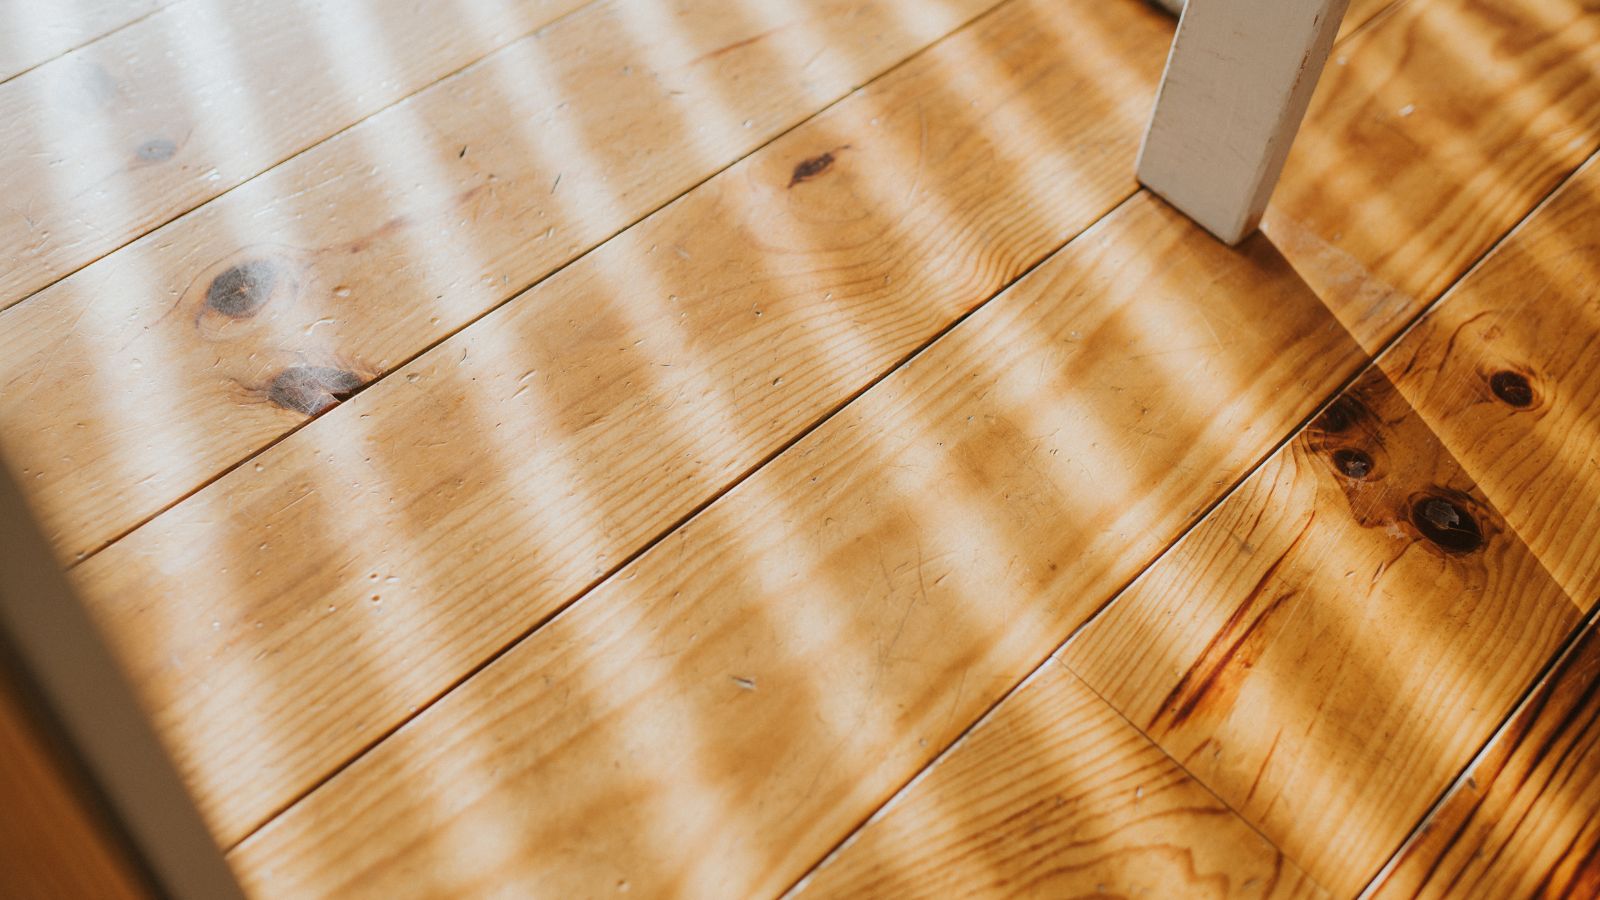 Install Hardwood Flooring Over Tile Floor Double Glue Down Method - YouTube